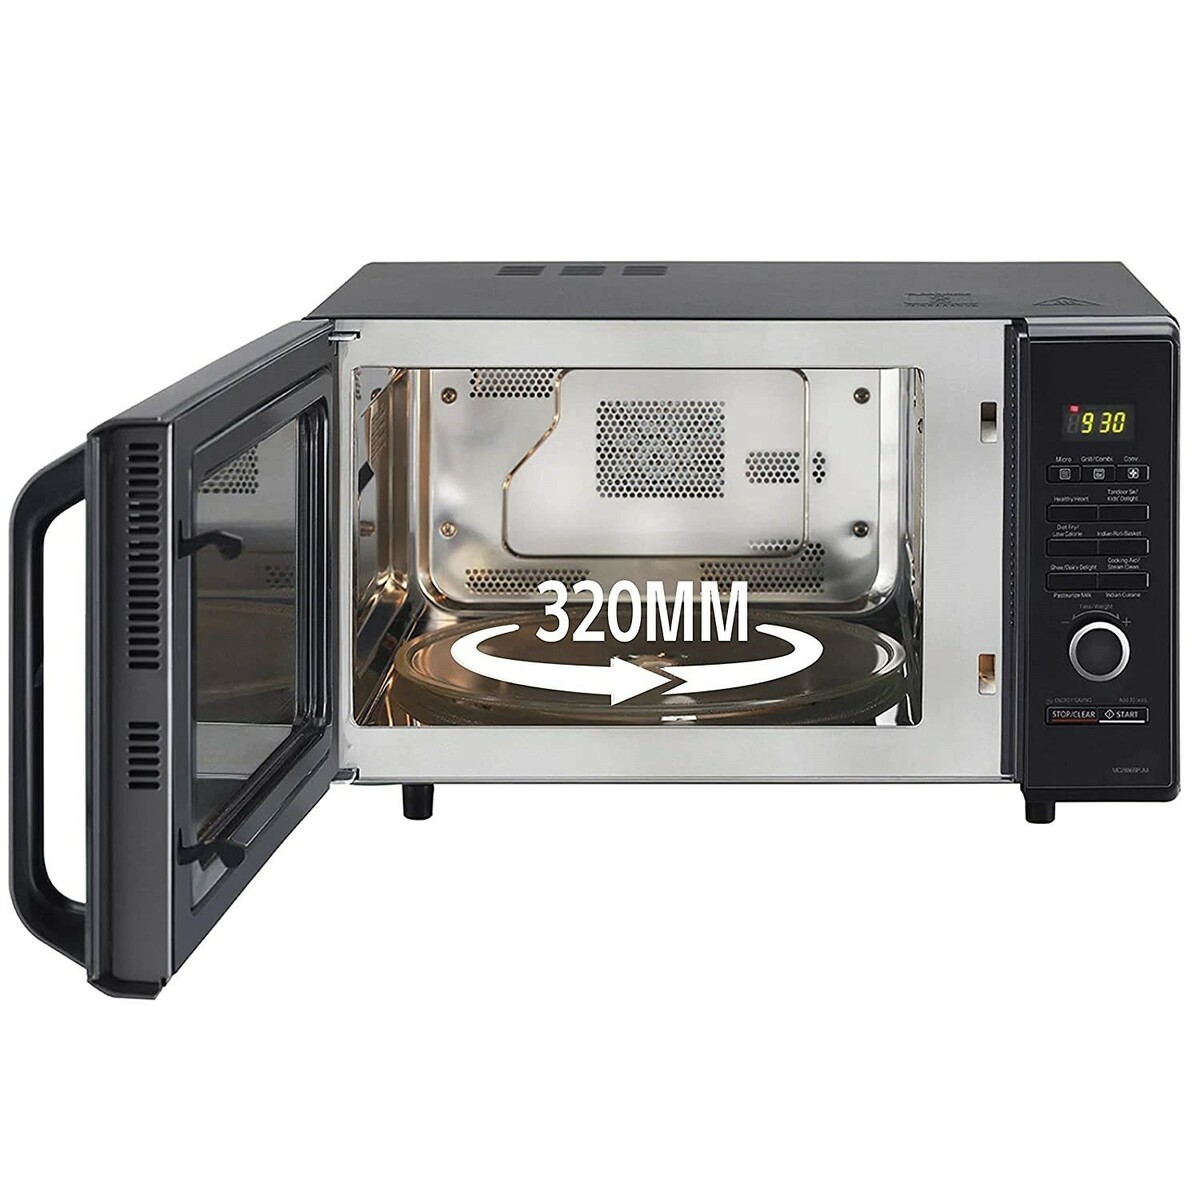 Buy LG Microwave Oven MC2886BPUM 28Ltr Online Lulu Hypermarket India